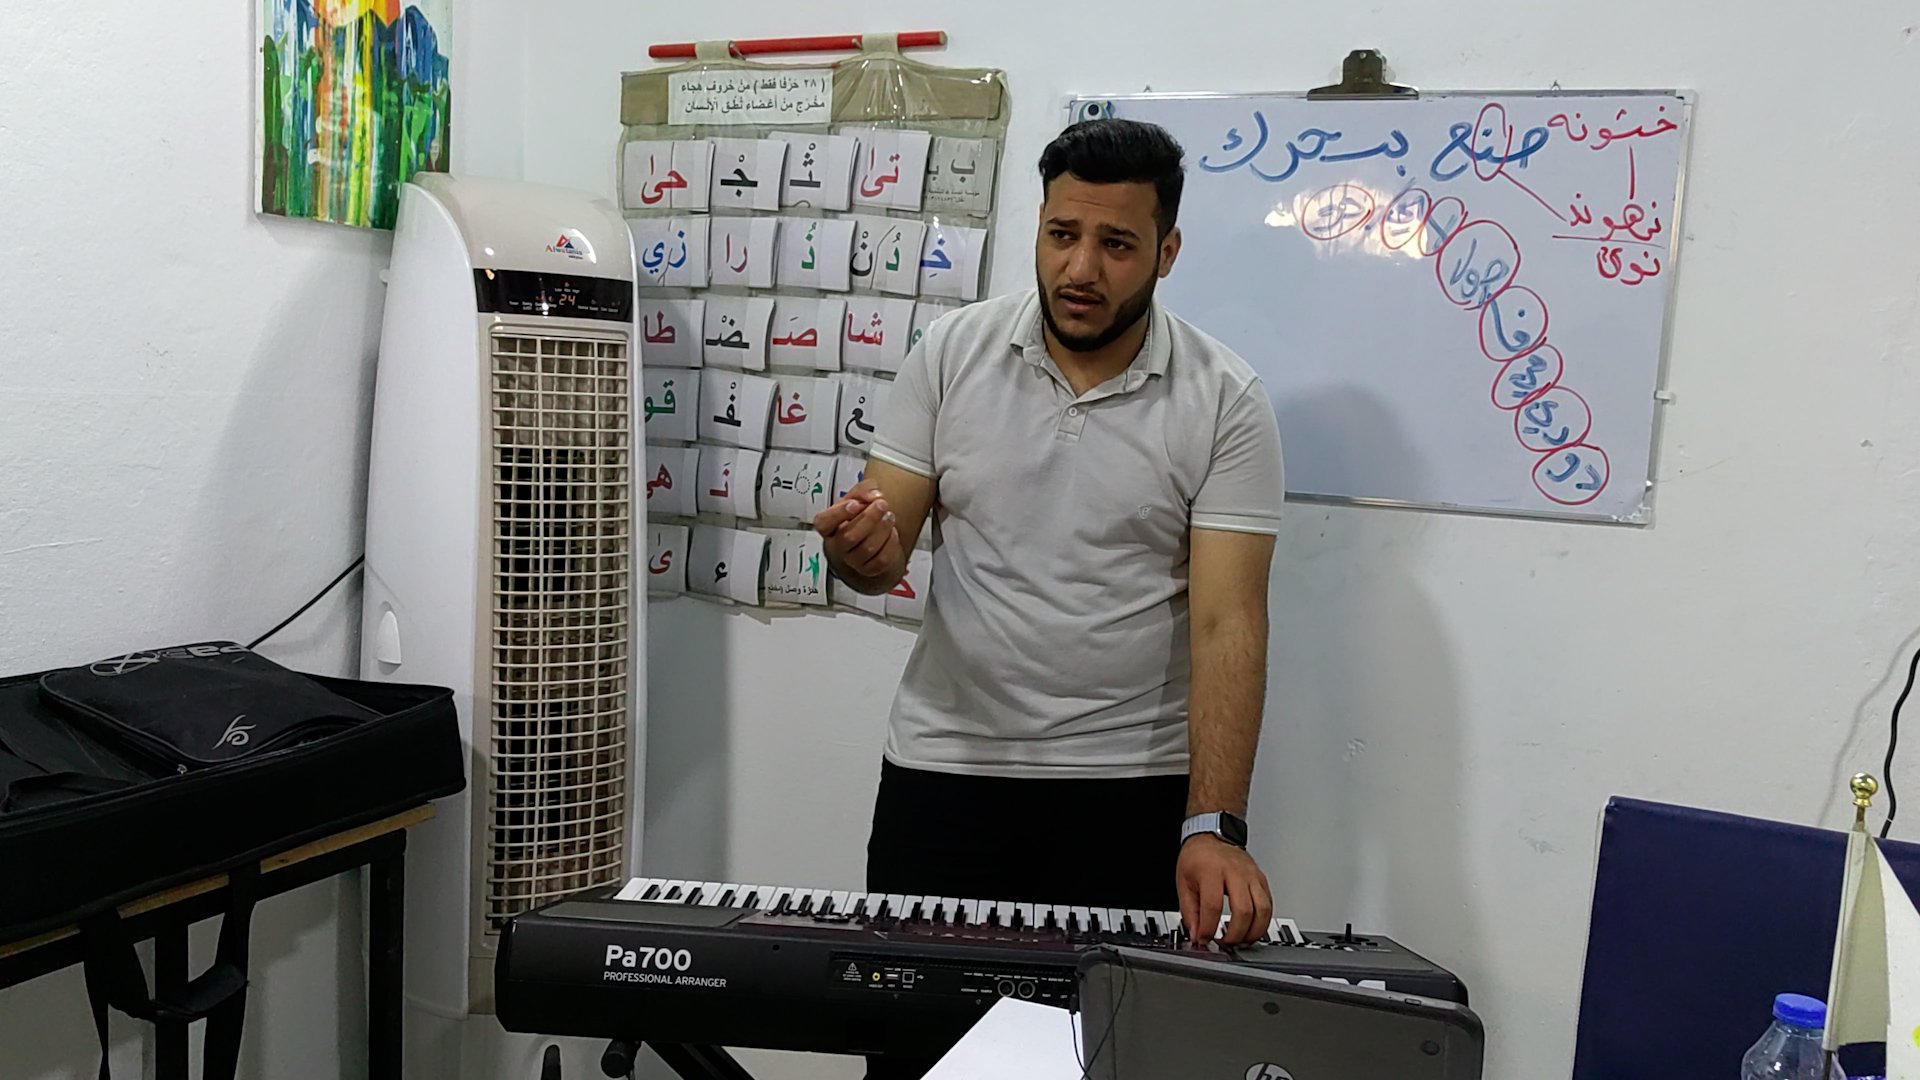 Mosul workshop inspires youth to embrace Iraqi maqam music